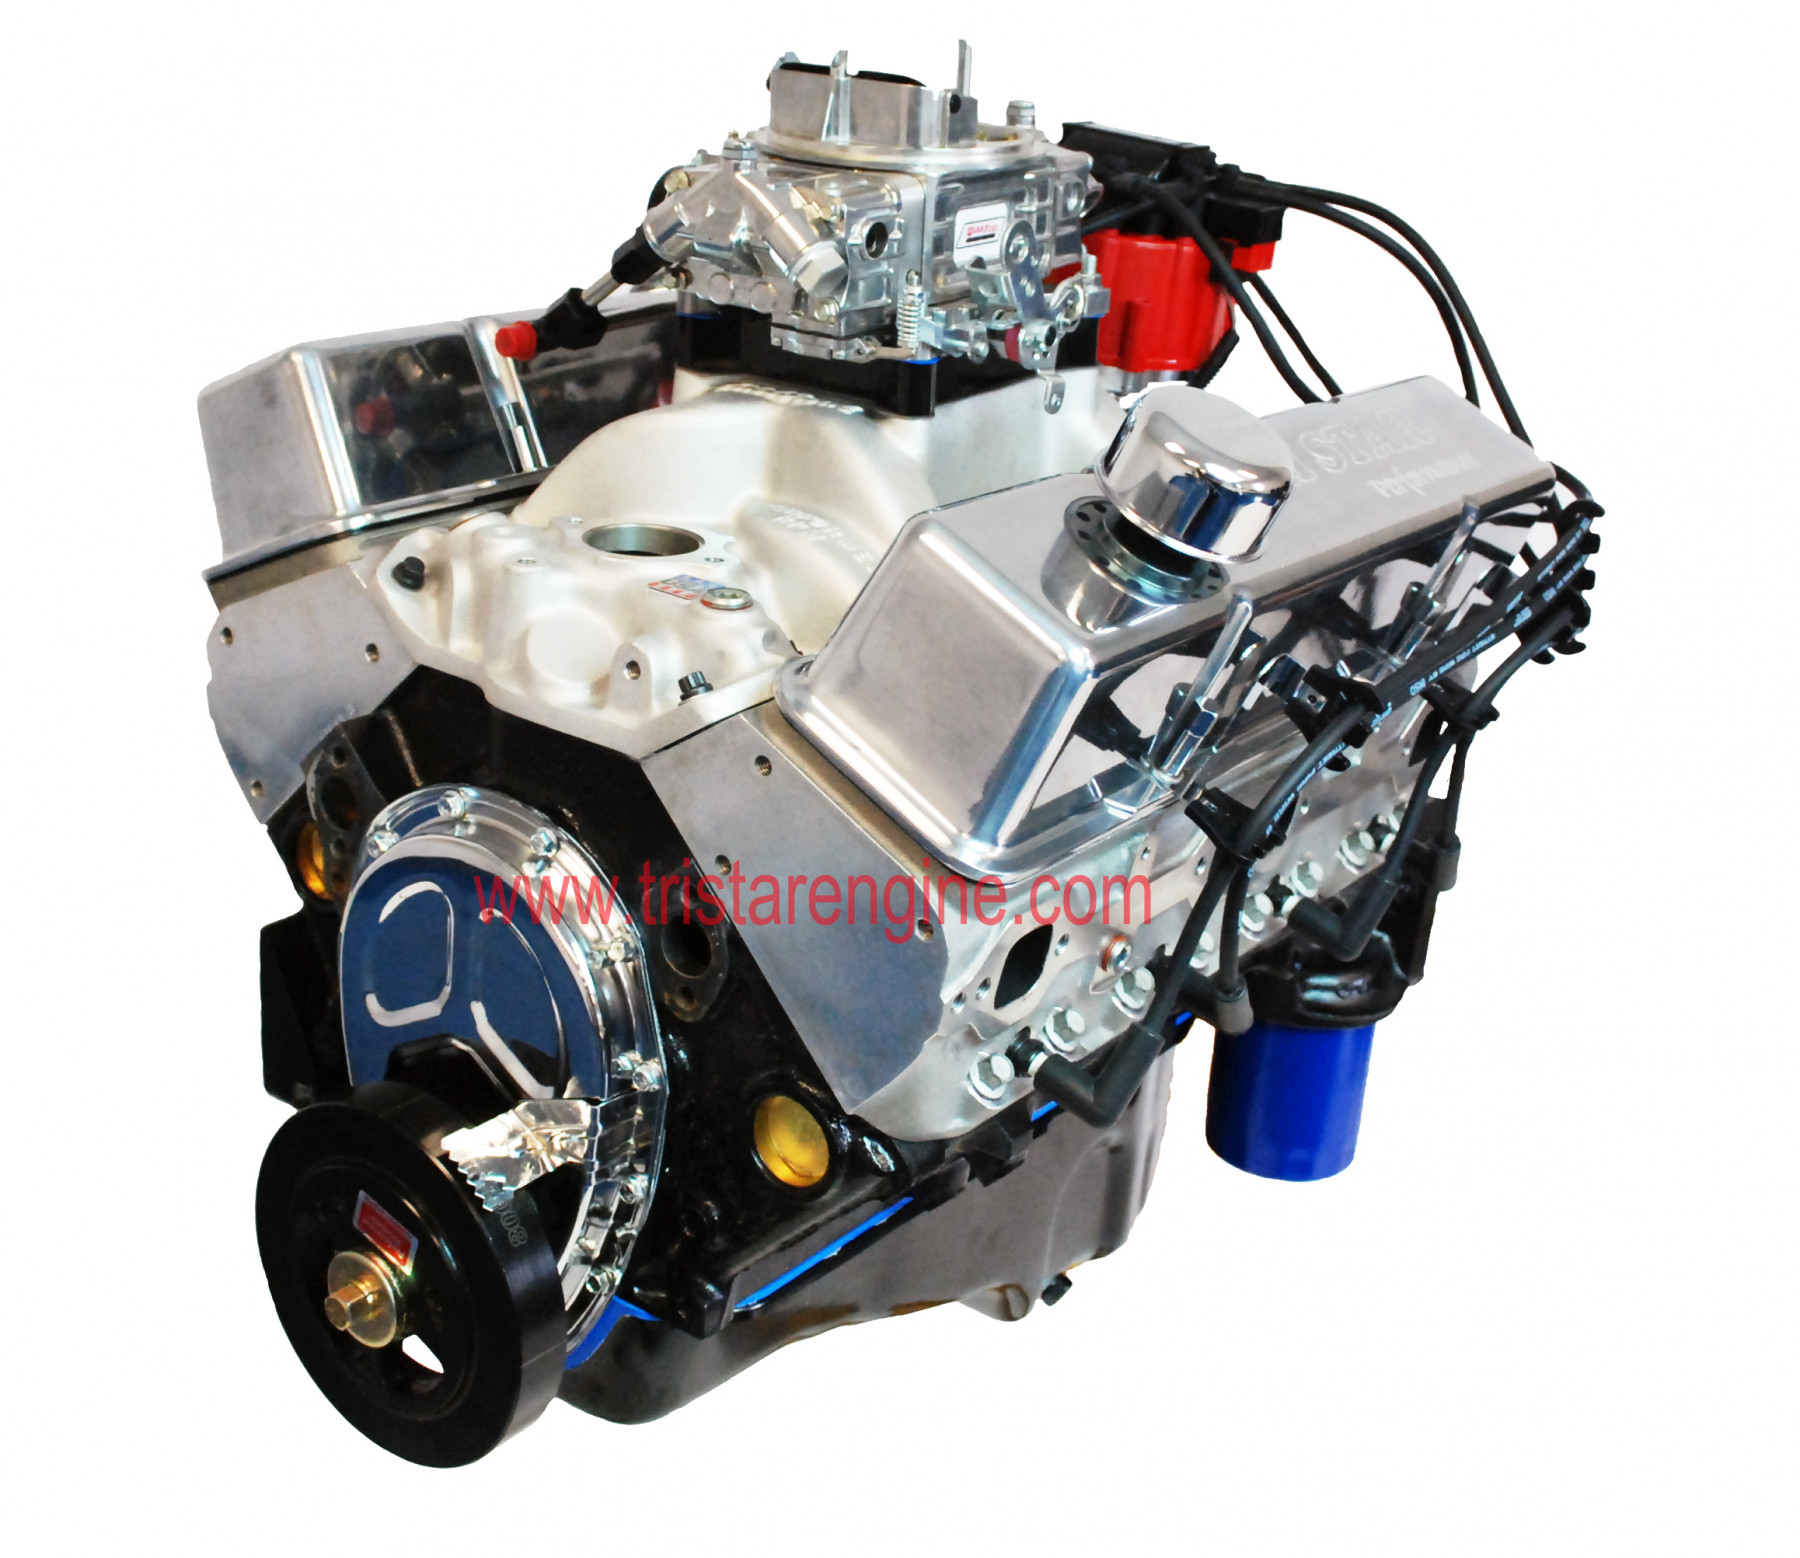 free online engine dyno horsepower